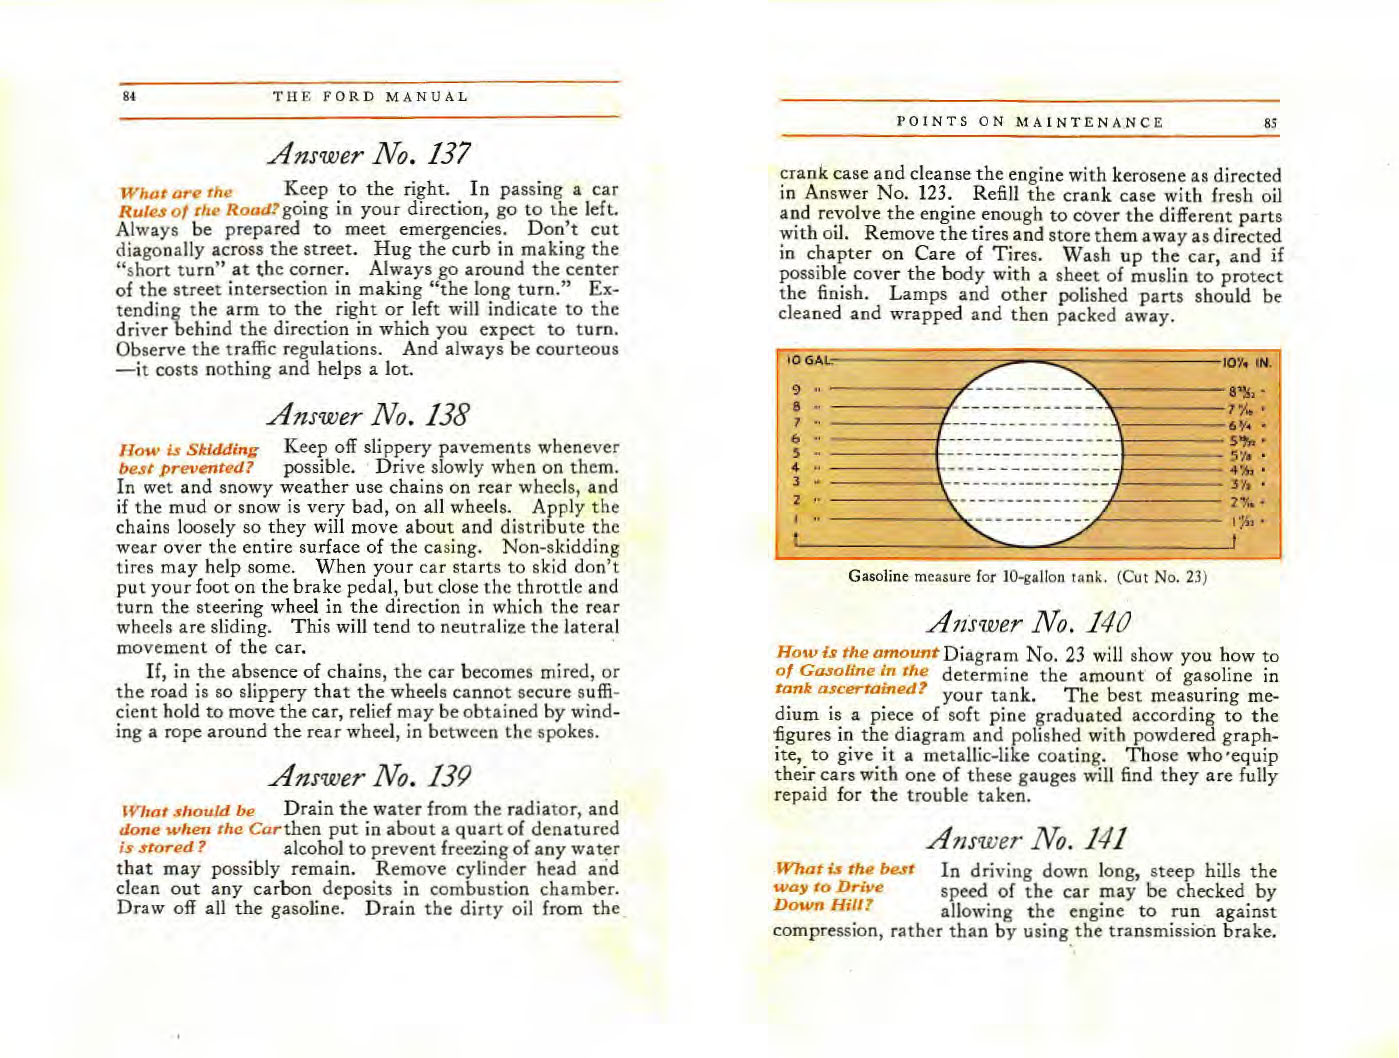 n_1915 Ford Owners Manual-84-85.jpg